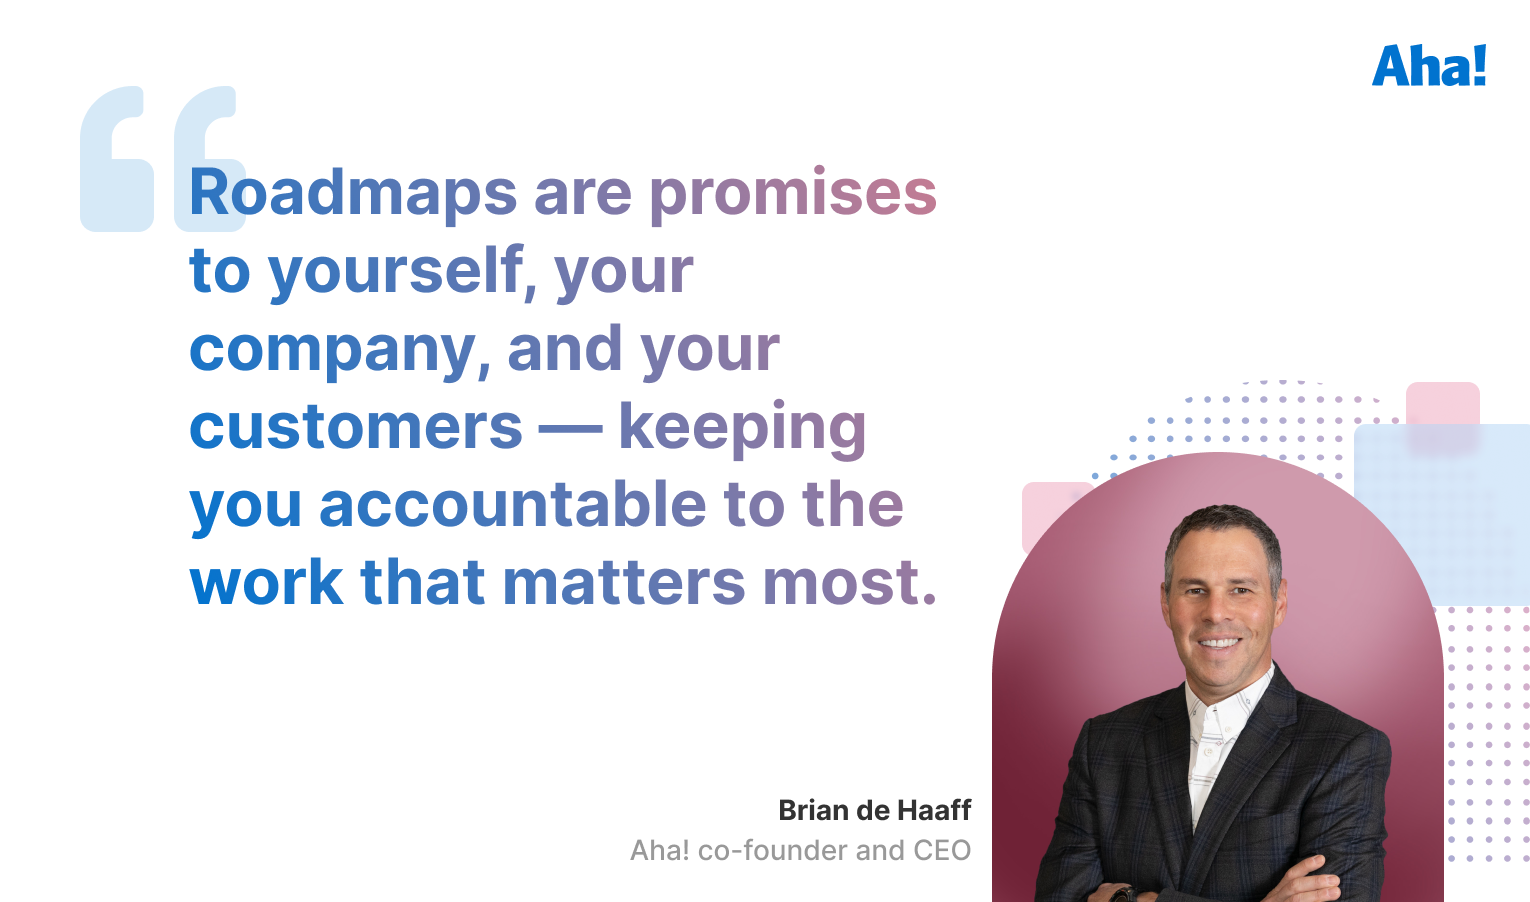 Brian de Haaff quote about roadmaps